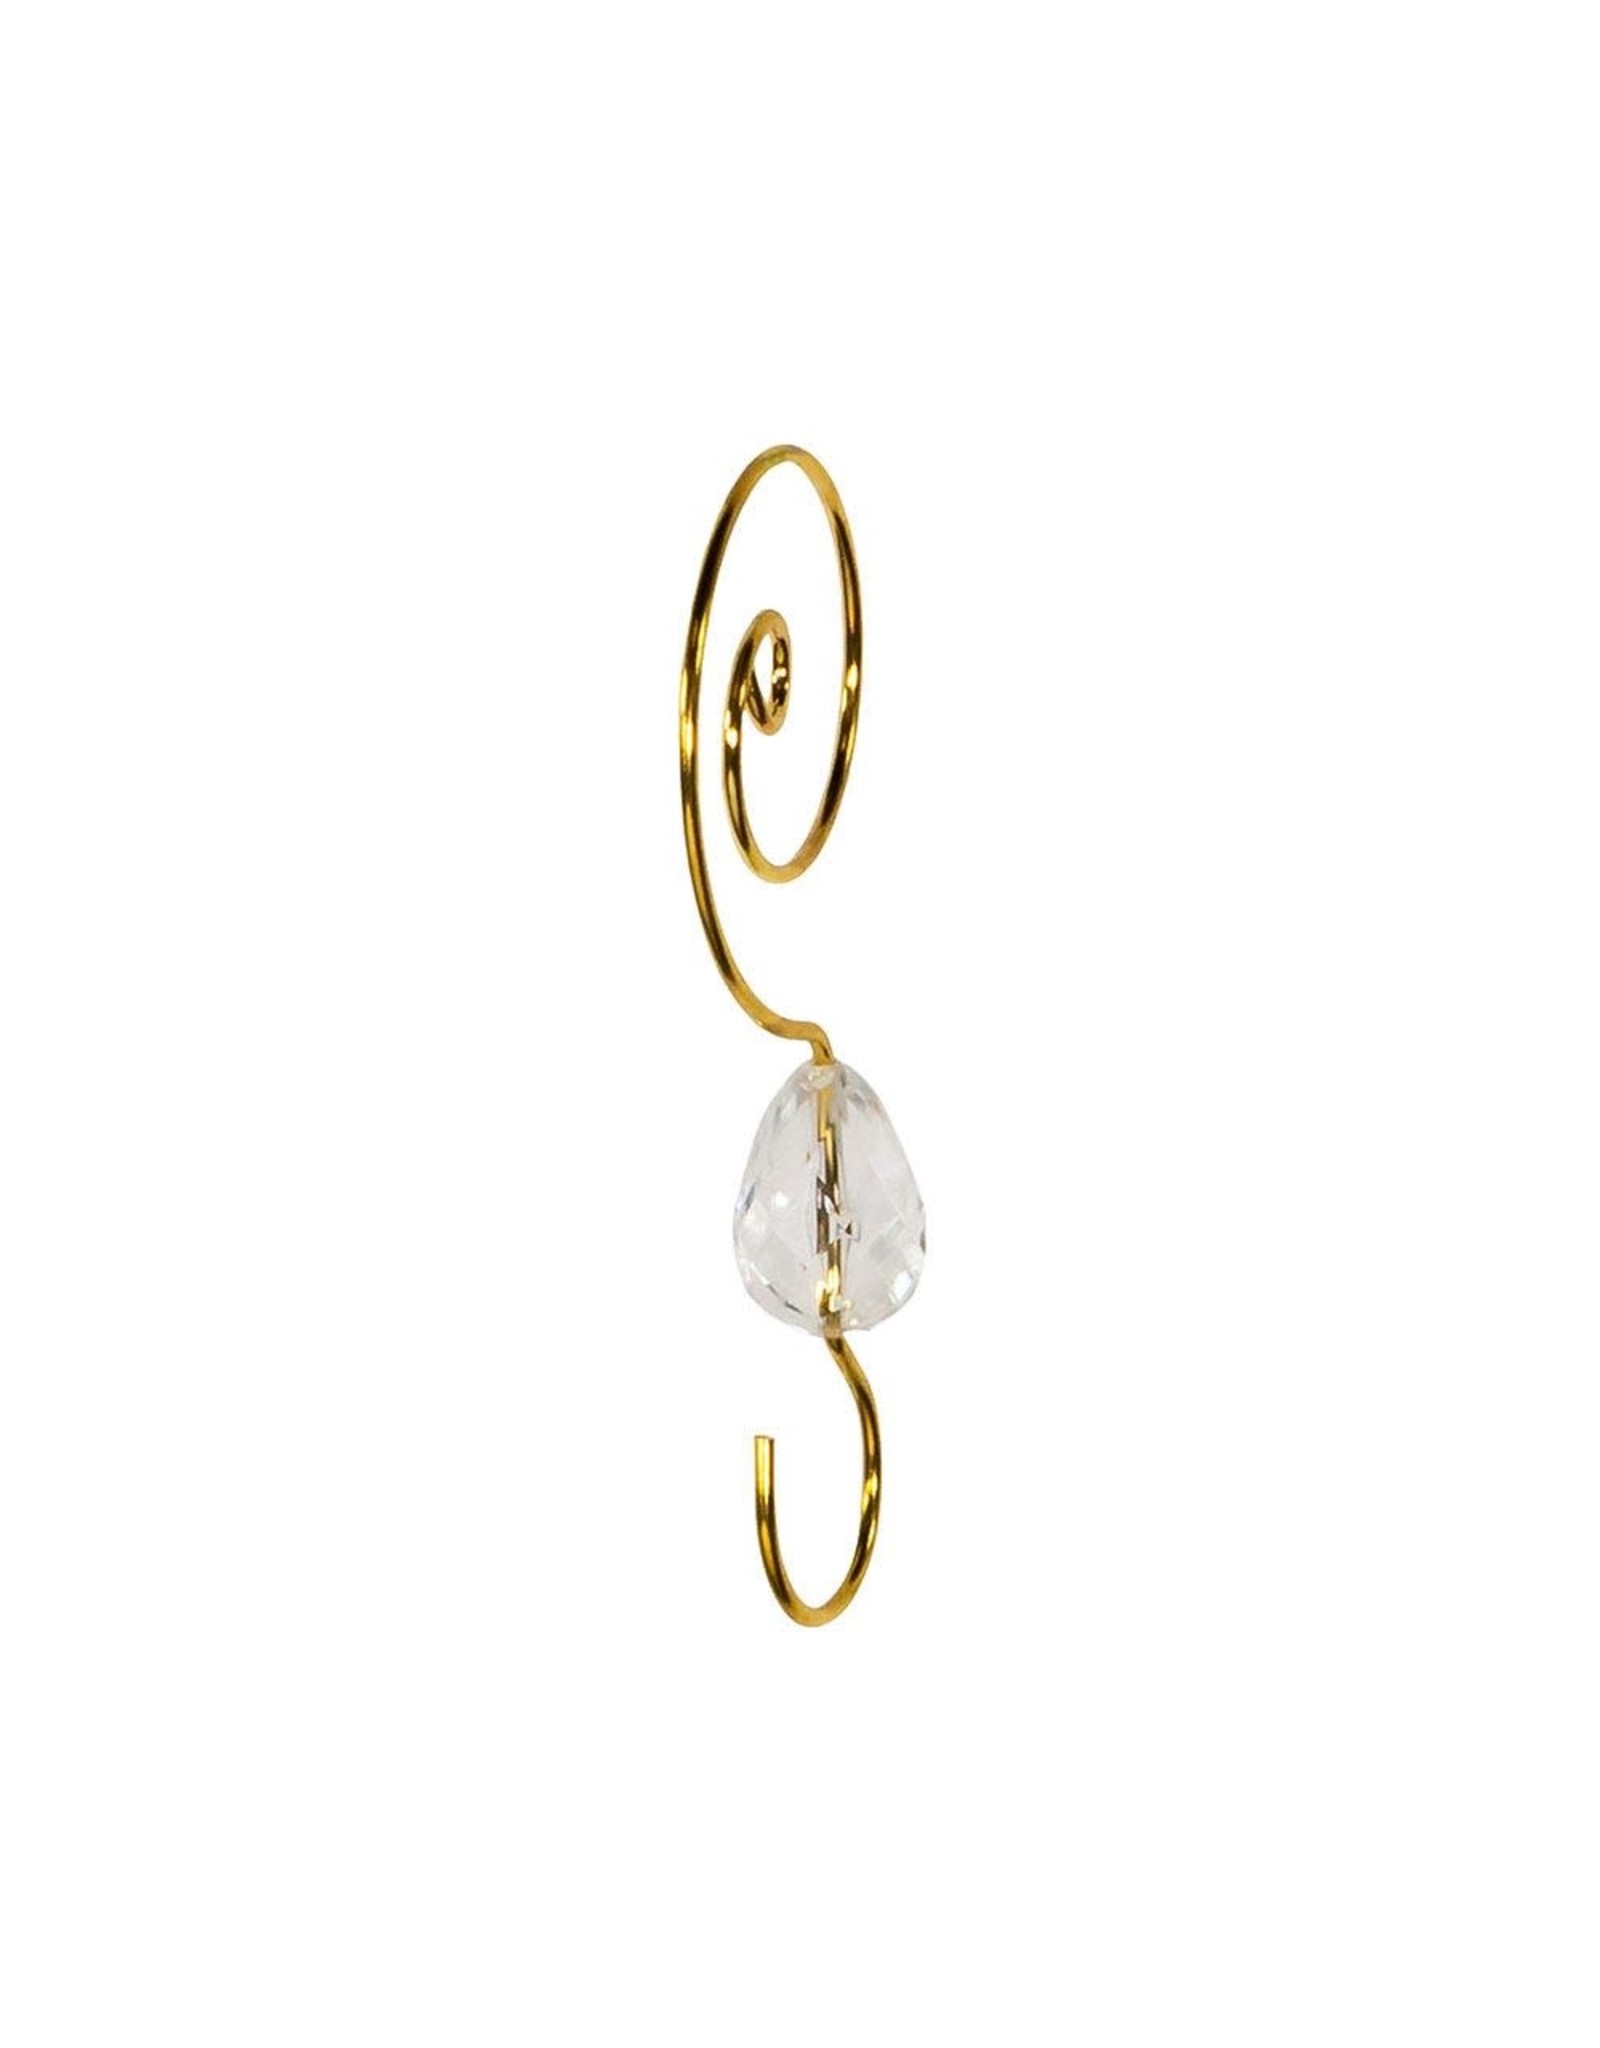 Kurt Adler Christmas Ornament Hooks Gold Wire w Clear Acrylic Jewel 24pc